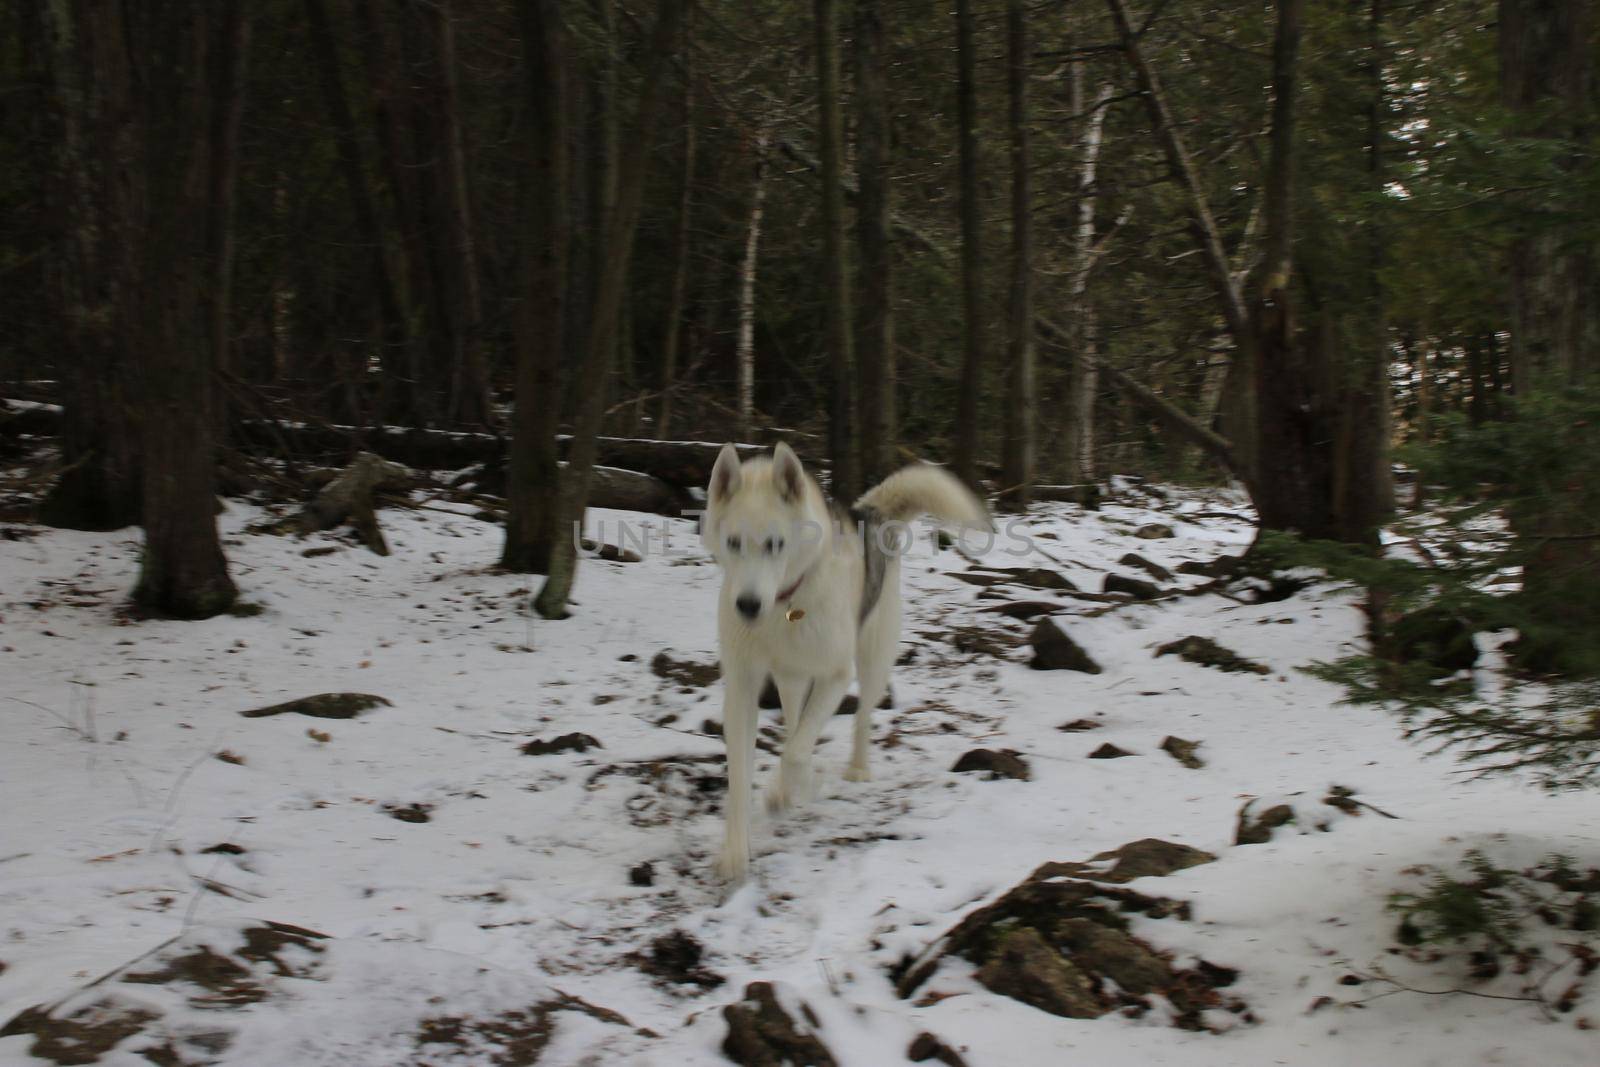 Husky hiking through a snowy winter forest by mynewturtle1